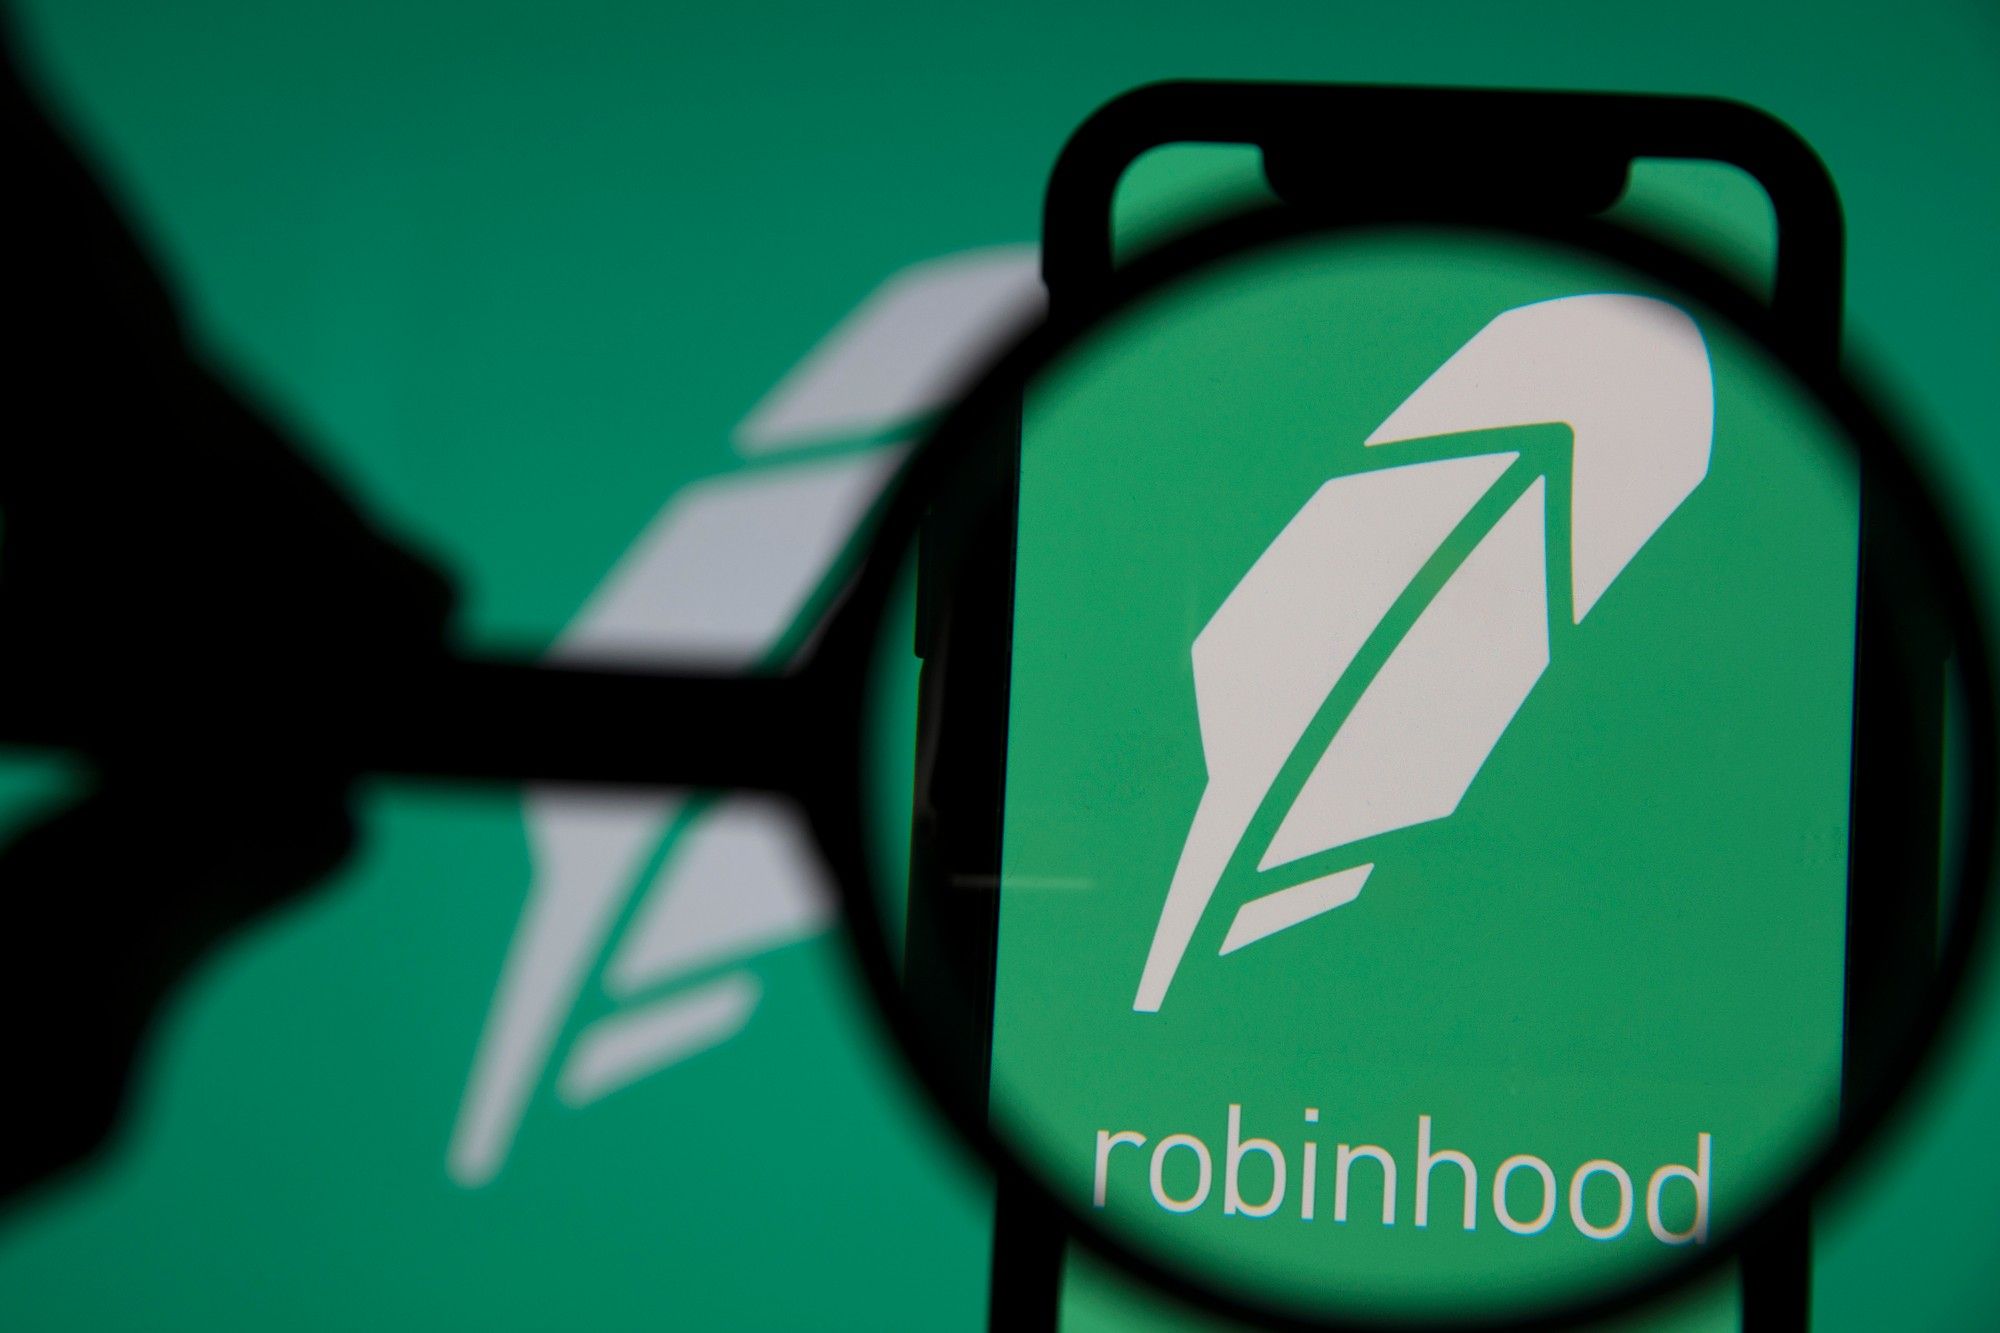 Robinhood class action lawsuits may face legal hurdles, say experts